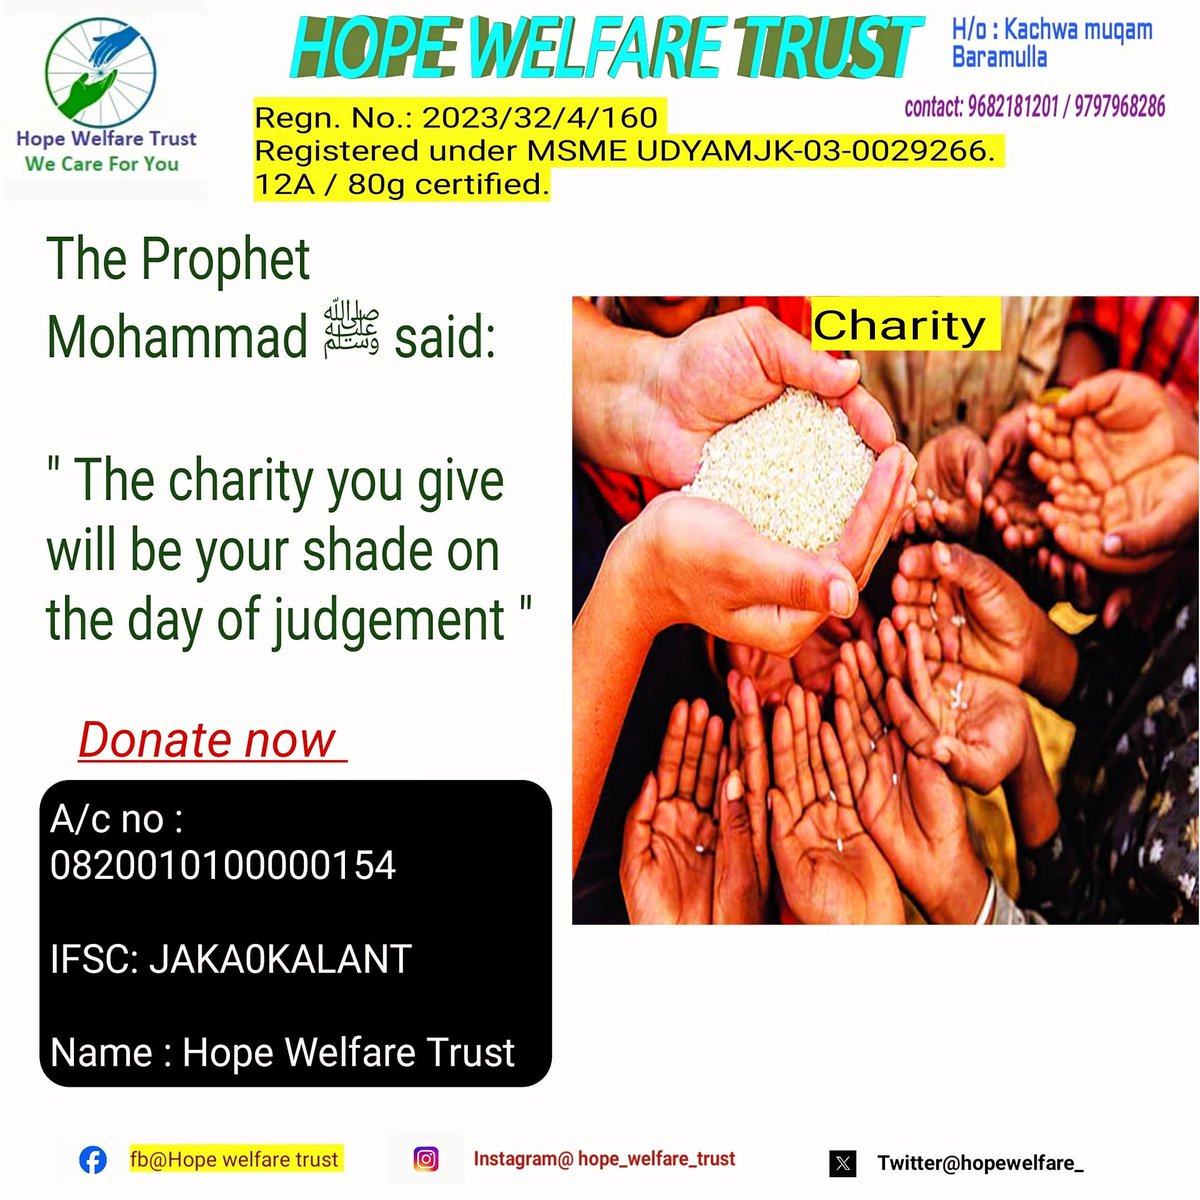 “Those who spend in charity will be richly rewarded.” [Quran 75:10]
.
.
#donatenow #hopewelfaretrust #TogetherWeCan #WeServeWithLove #socialwork #sadqajariya #needypeople #EkPehal #donate #charity